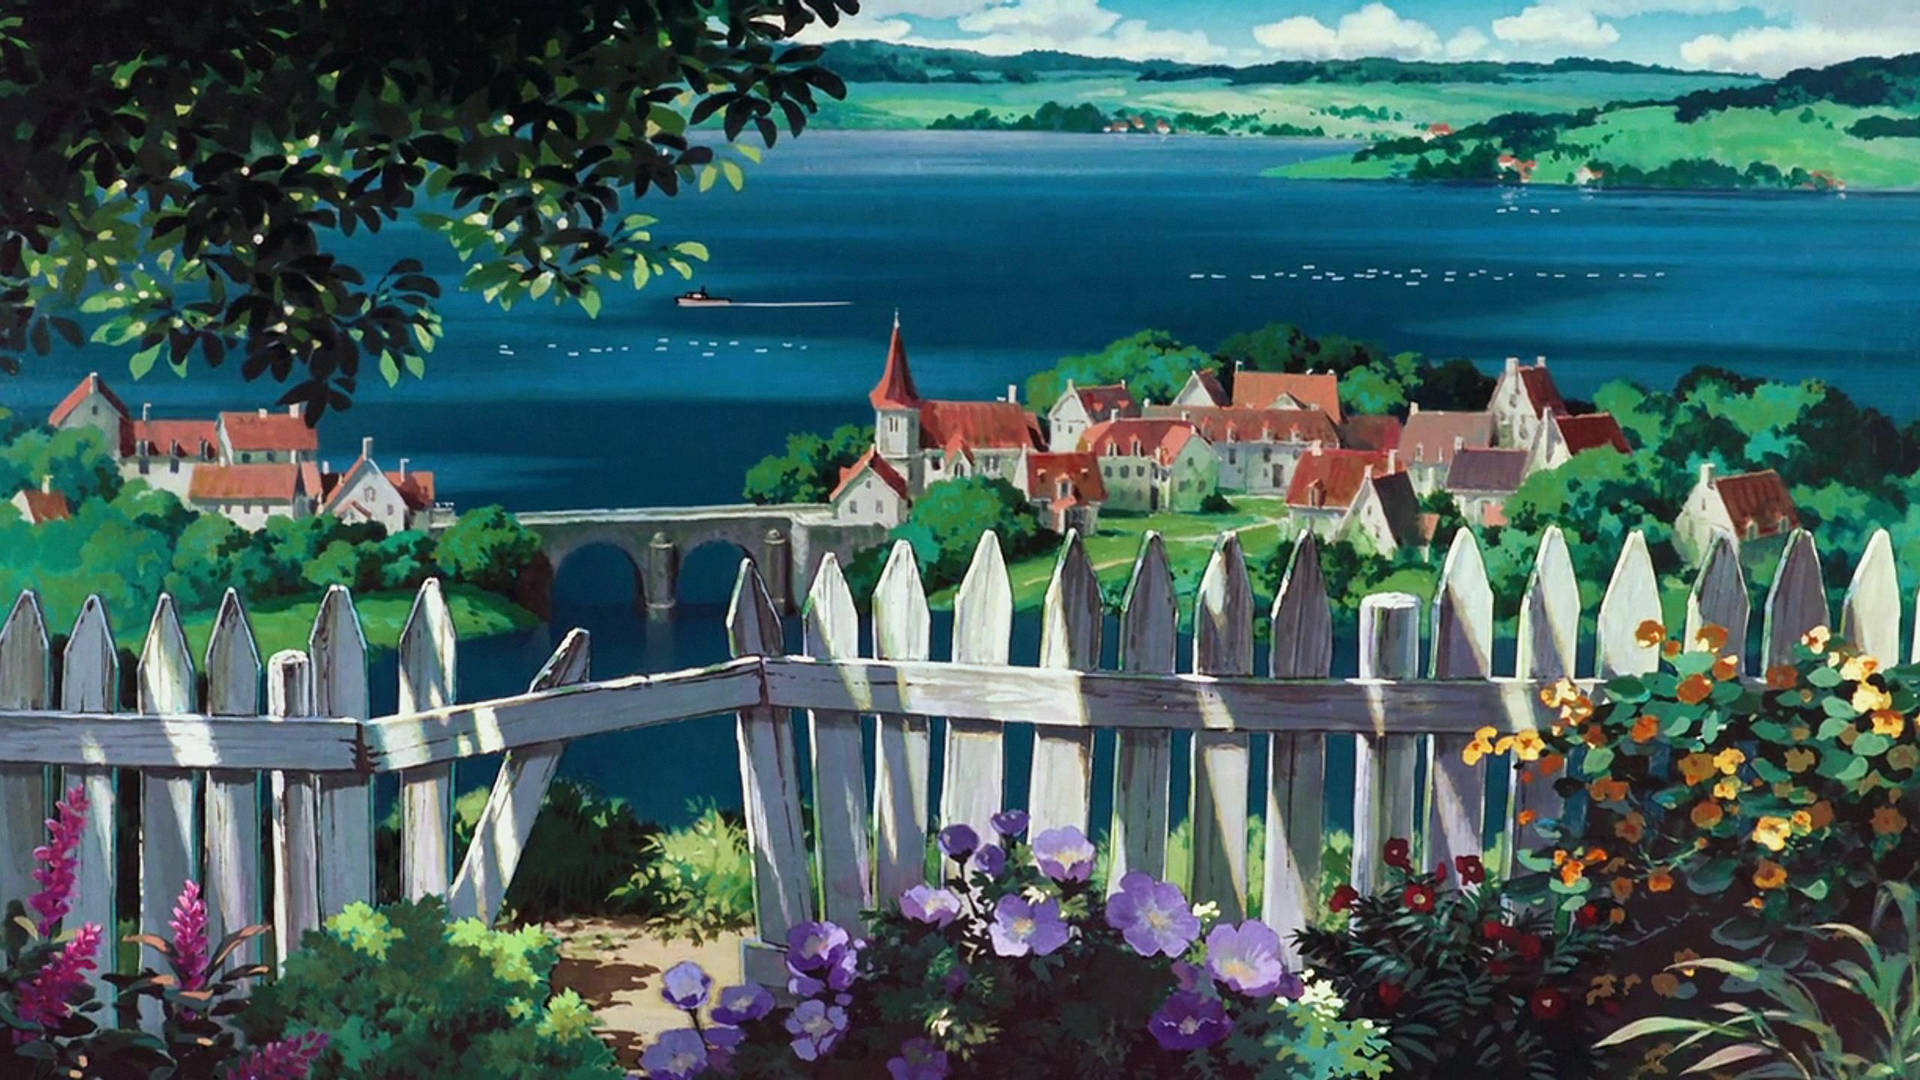 Studio Ghibli 2560X1440 Wallpaper and Background Image